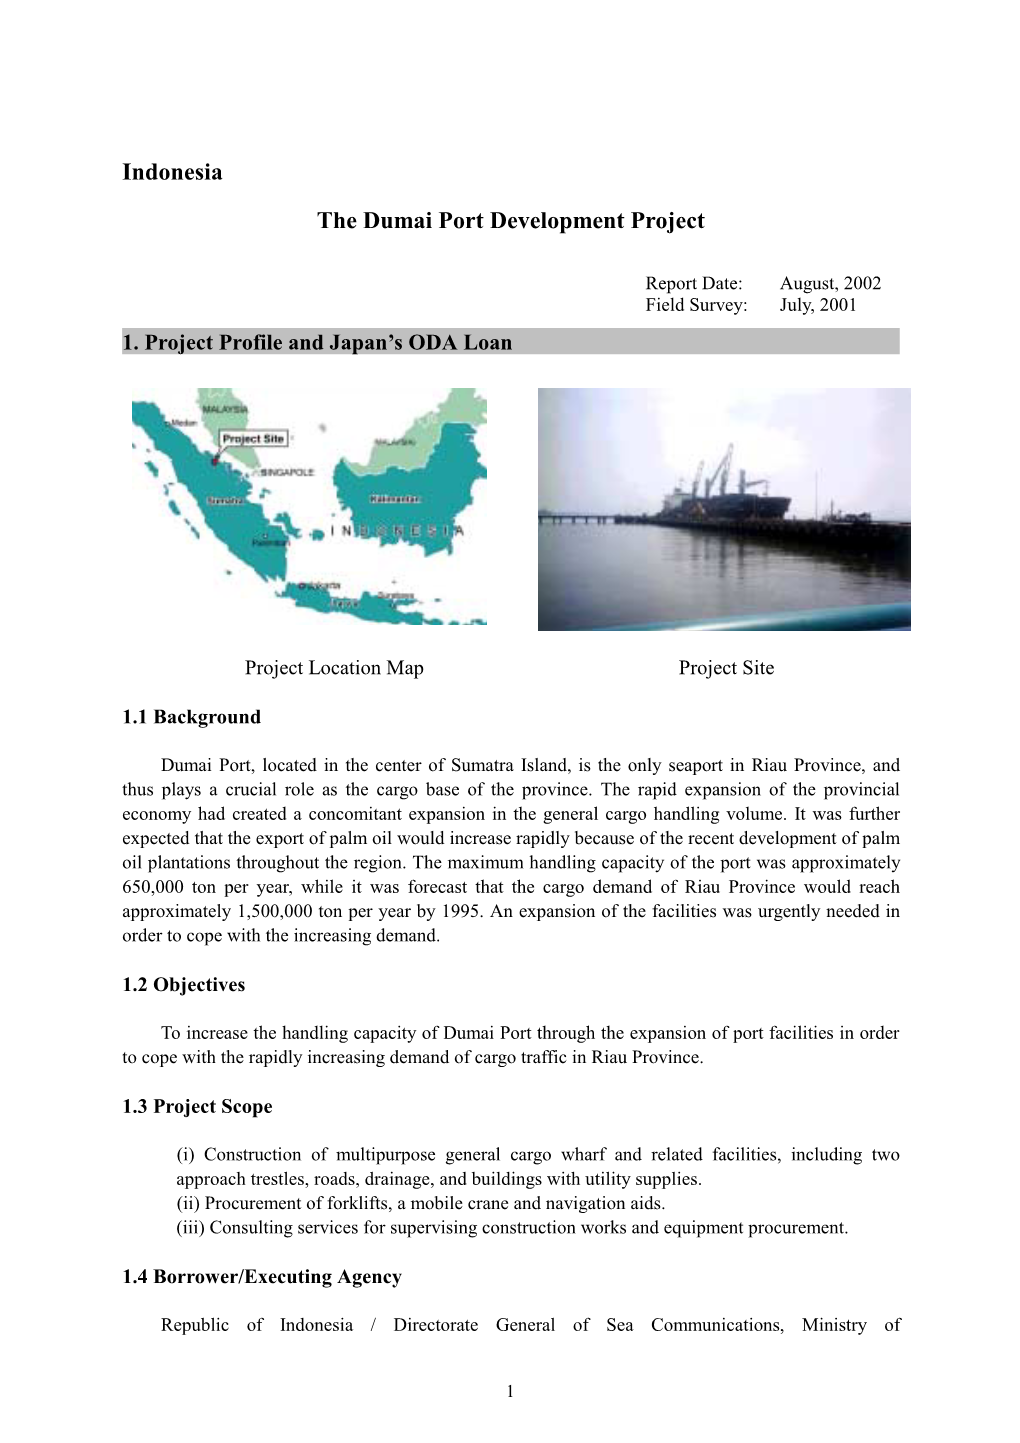 Indonesia the Dumai Port Development Project